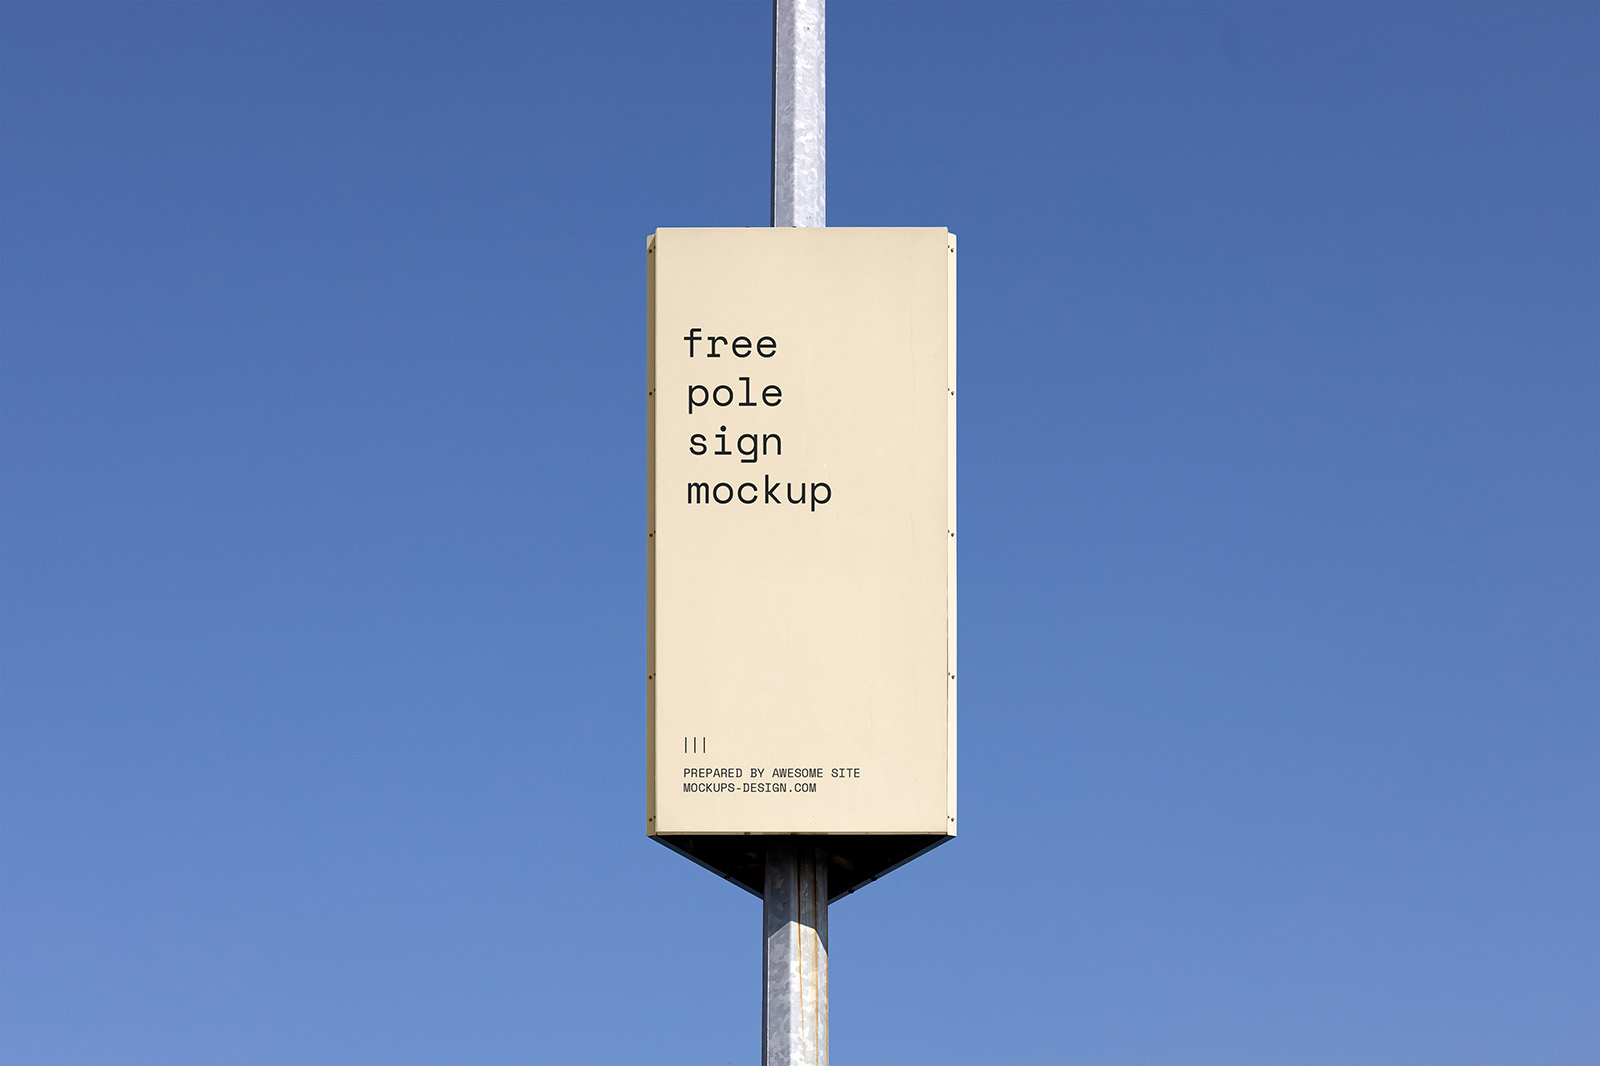 Free pole sign mockup